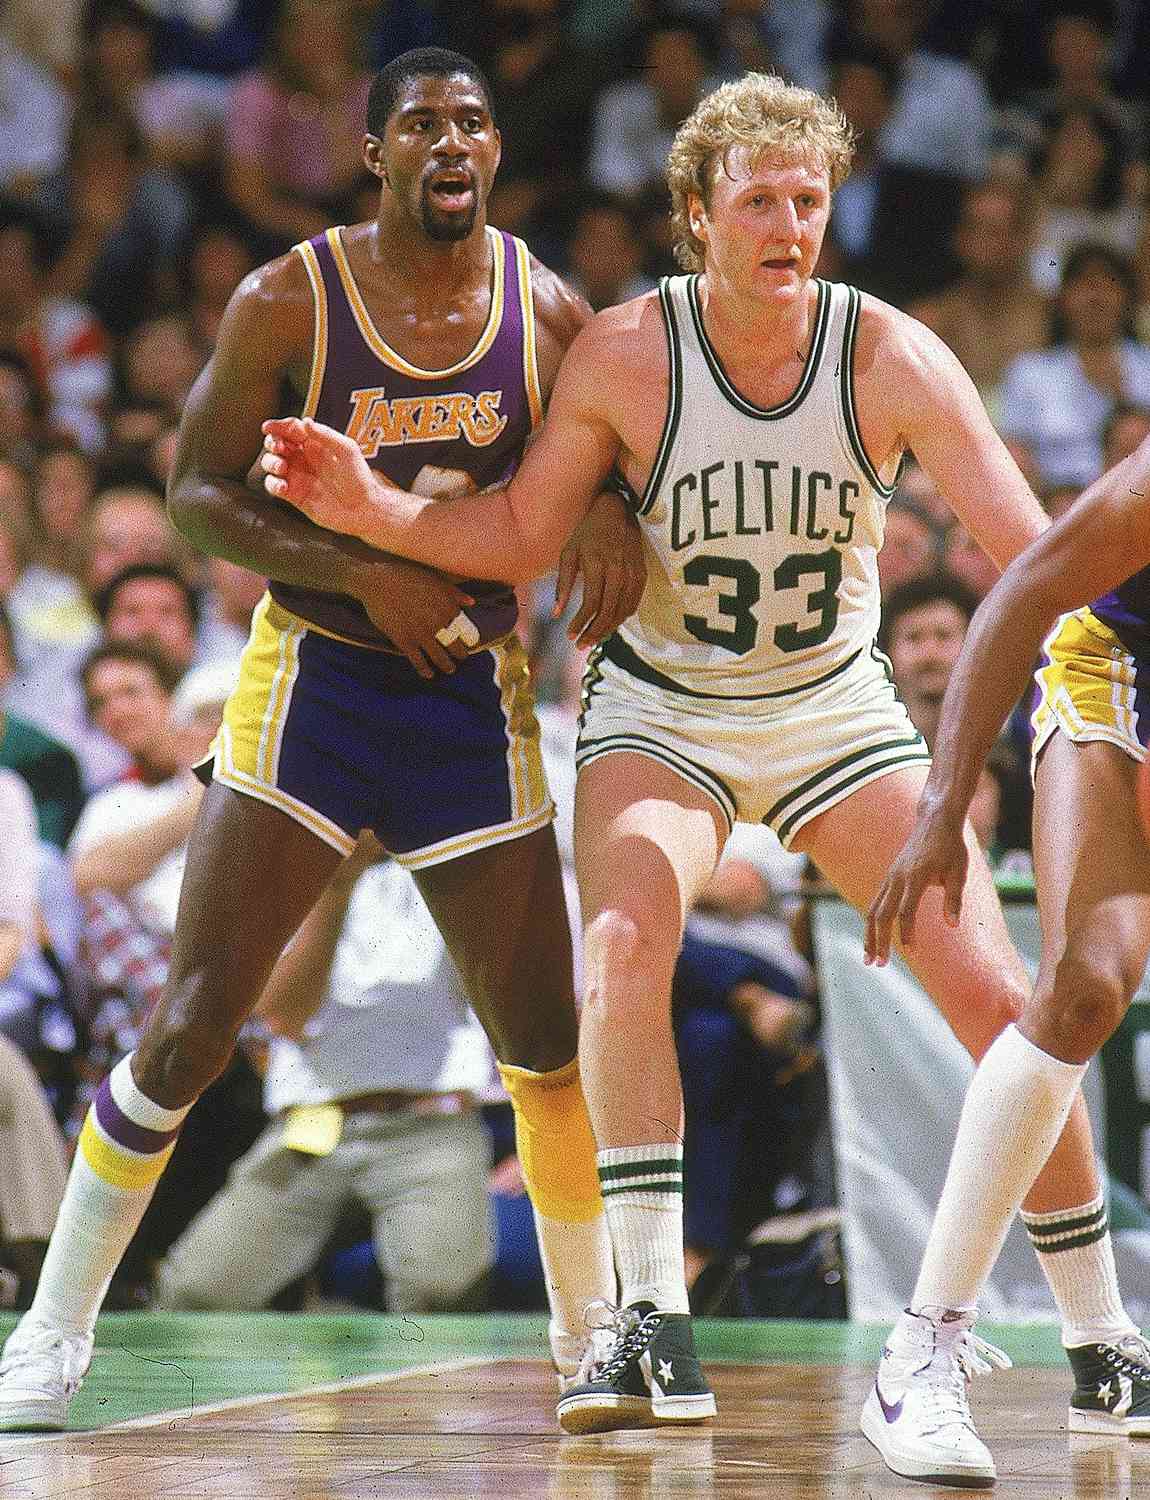 Los Angeles Lakers Magic Johnson (32) in action, fighting for position vs Boston Celtics Larry Bird (33), Boston, MA 5/27/1984